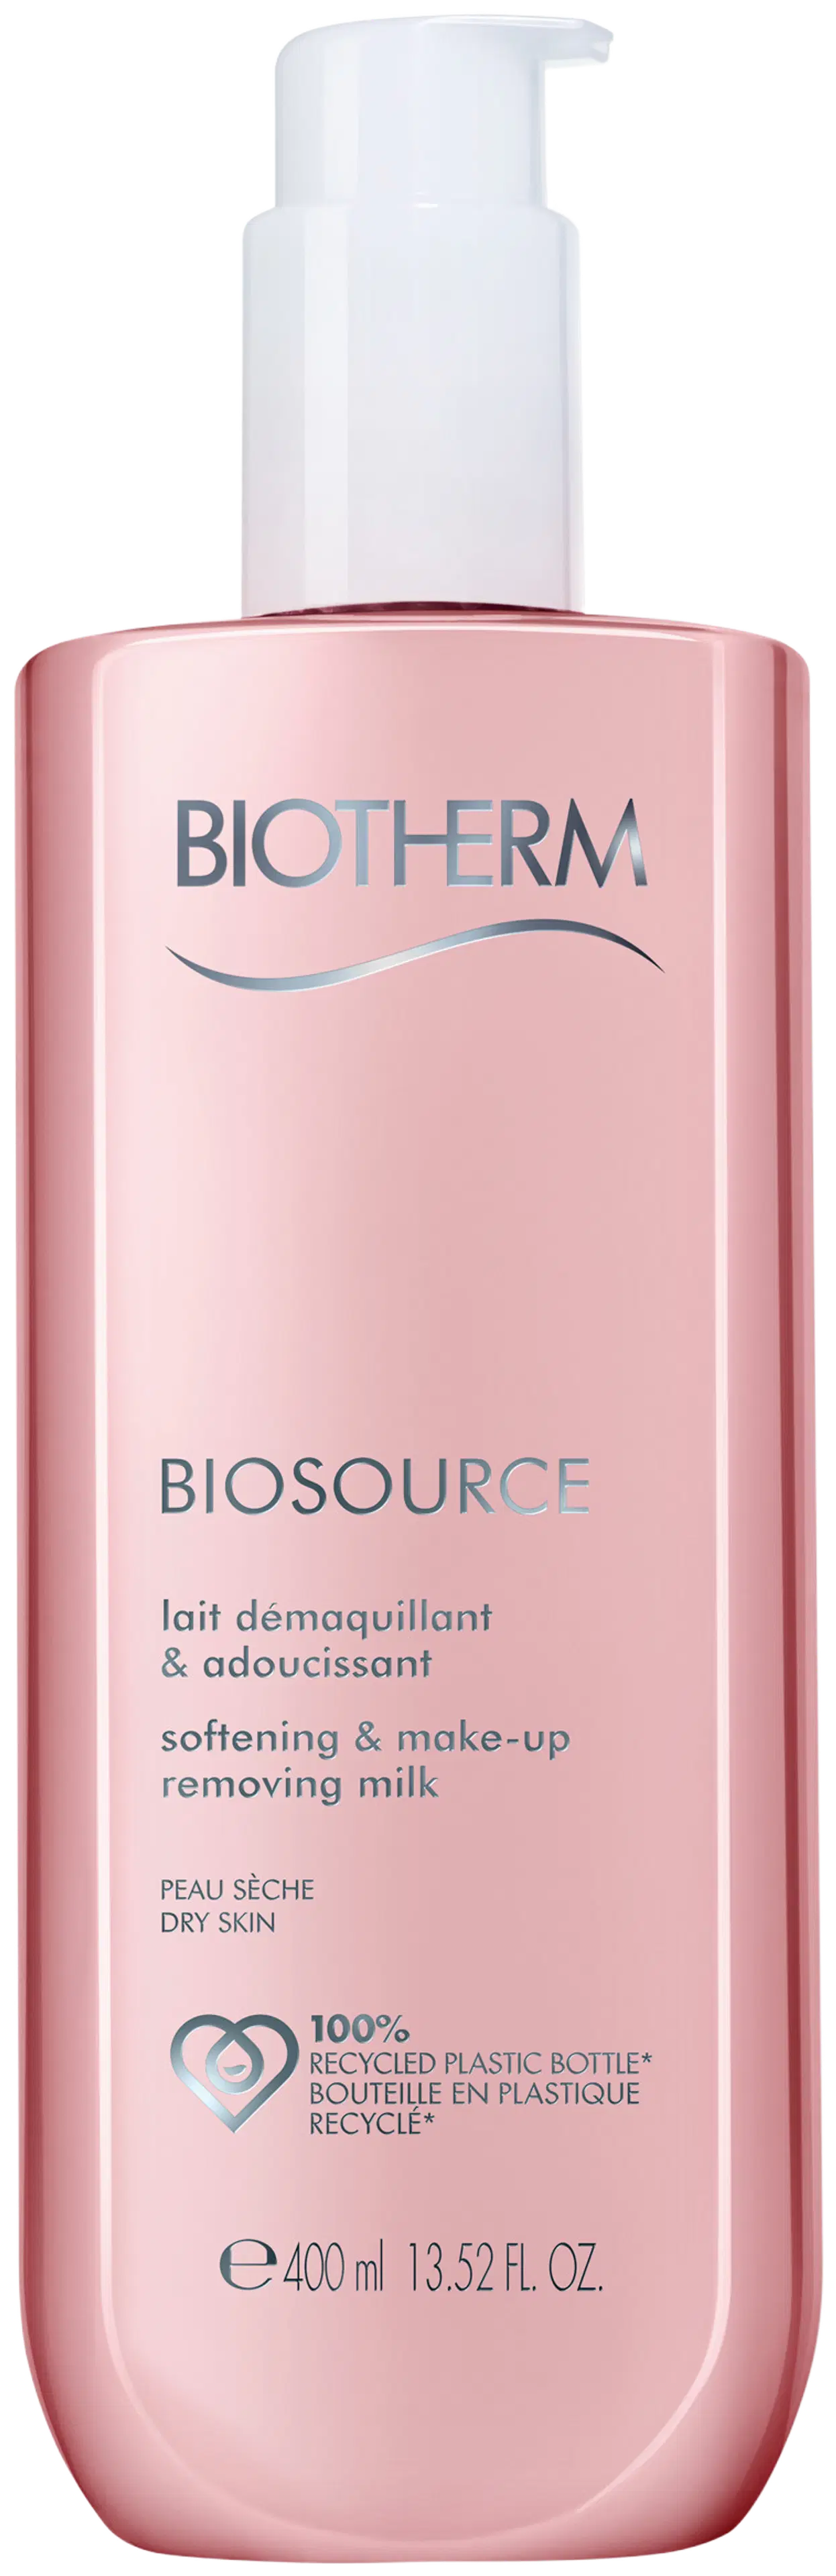 Biotherm Biosource Cleansing Milk Dry Skin puhdistusmaito 400 ml